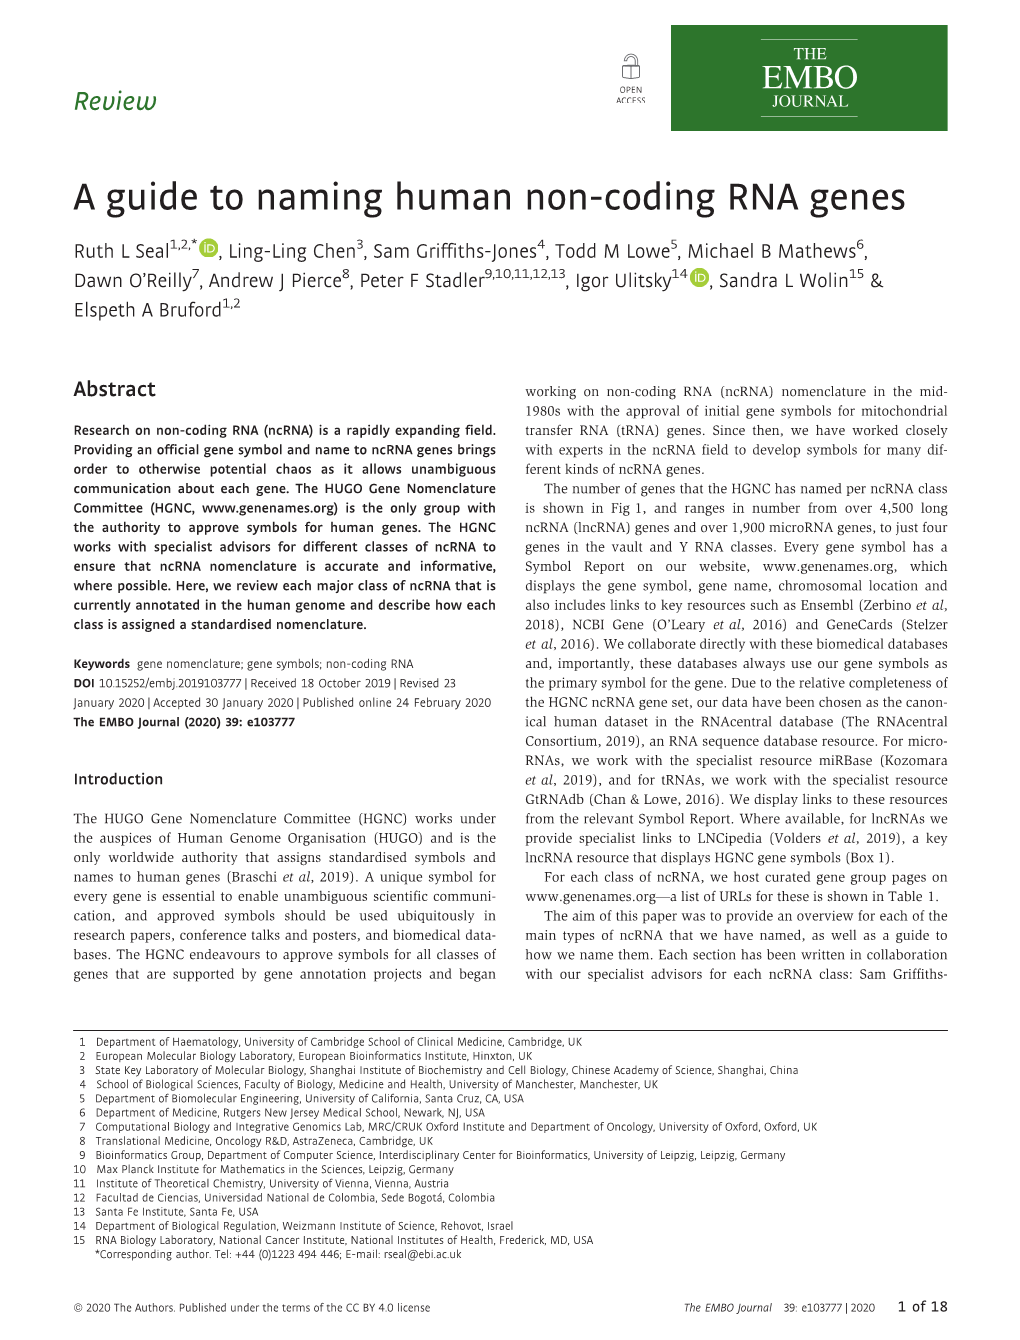 Coding RNA Genes